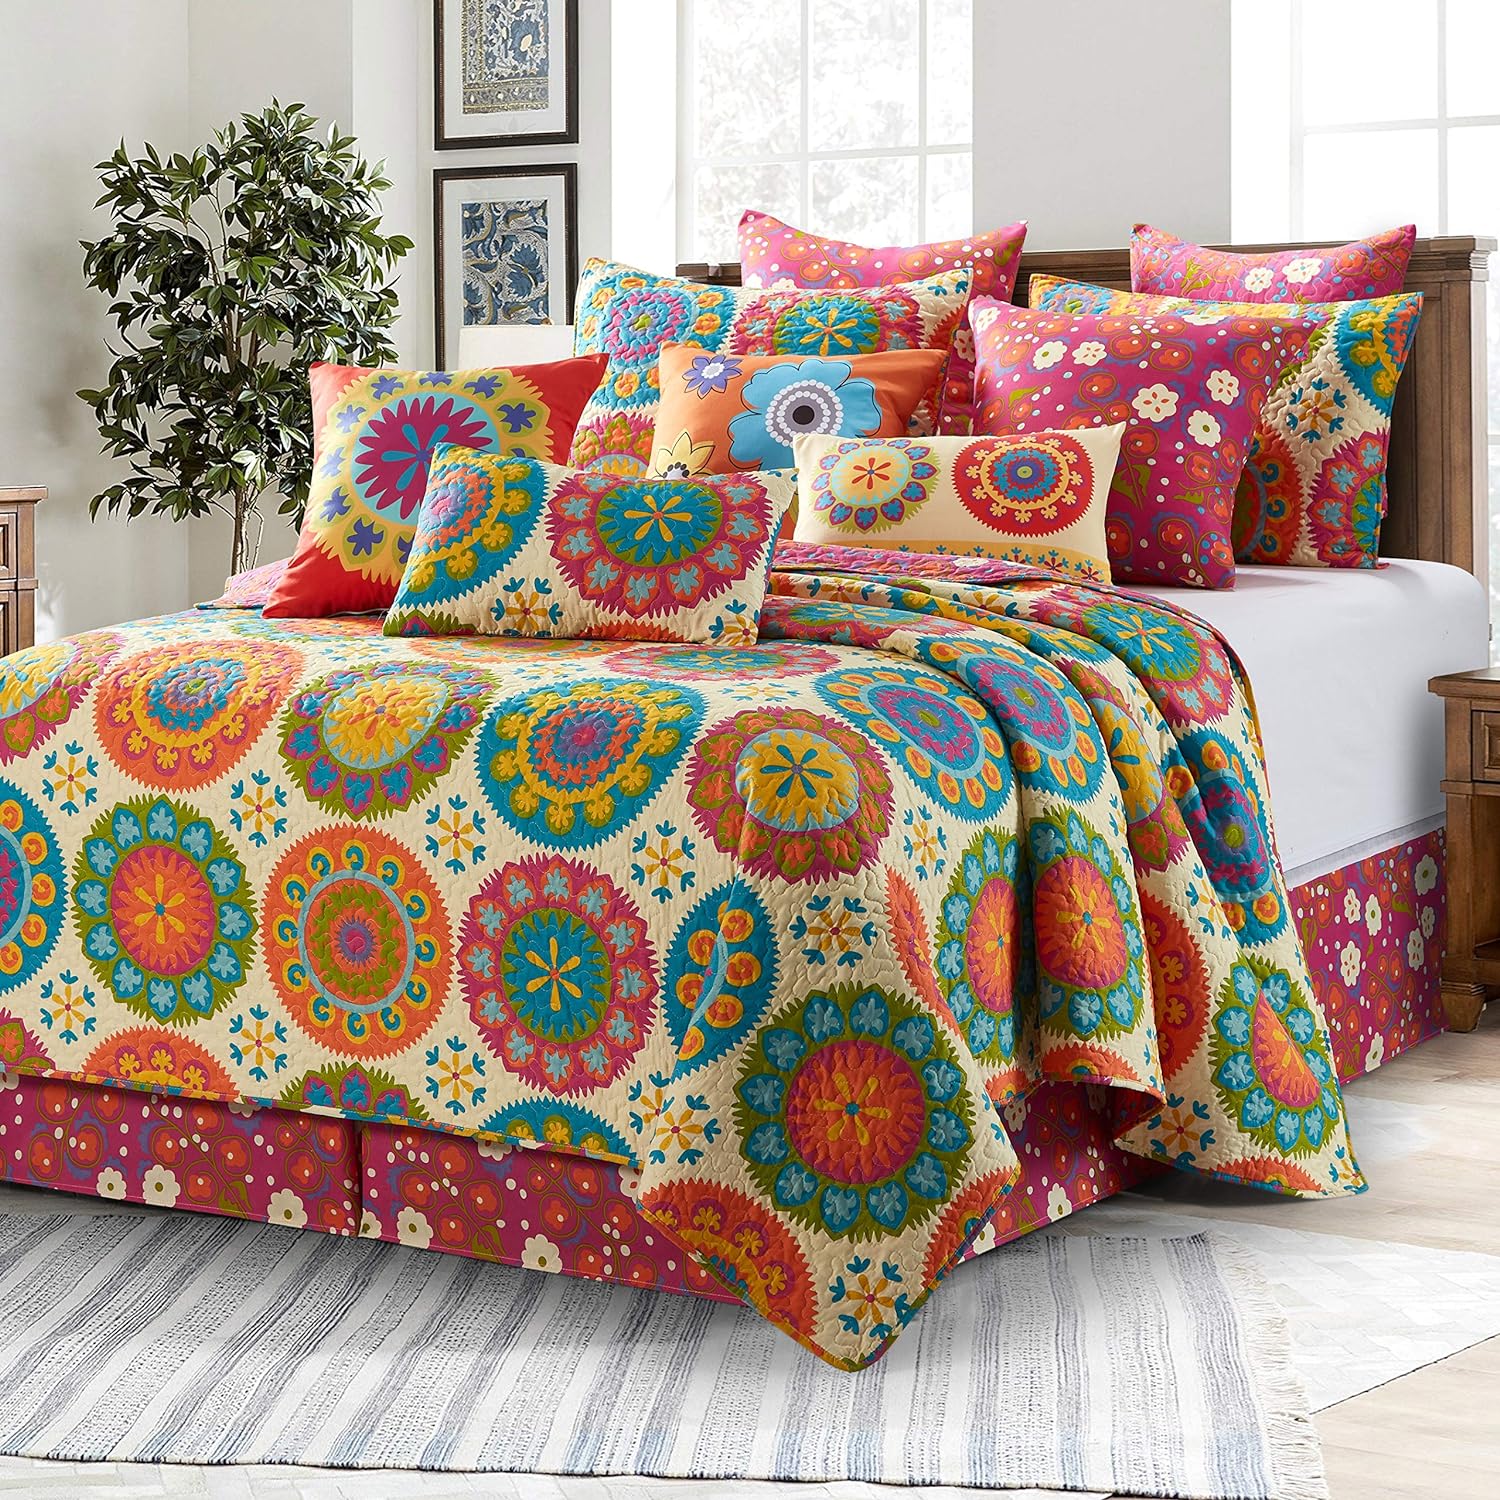 Virah Bella 2 Piece Full/Queen Lodge Quilt Bedding Set - Rustic Country Reversible Comforter Set with Decorative Pillow Shams - Suri